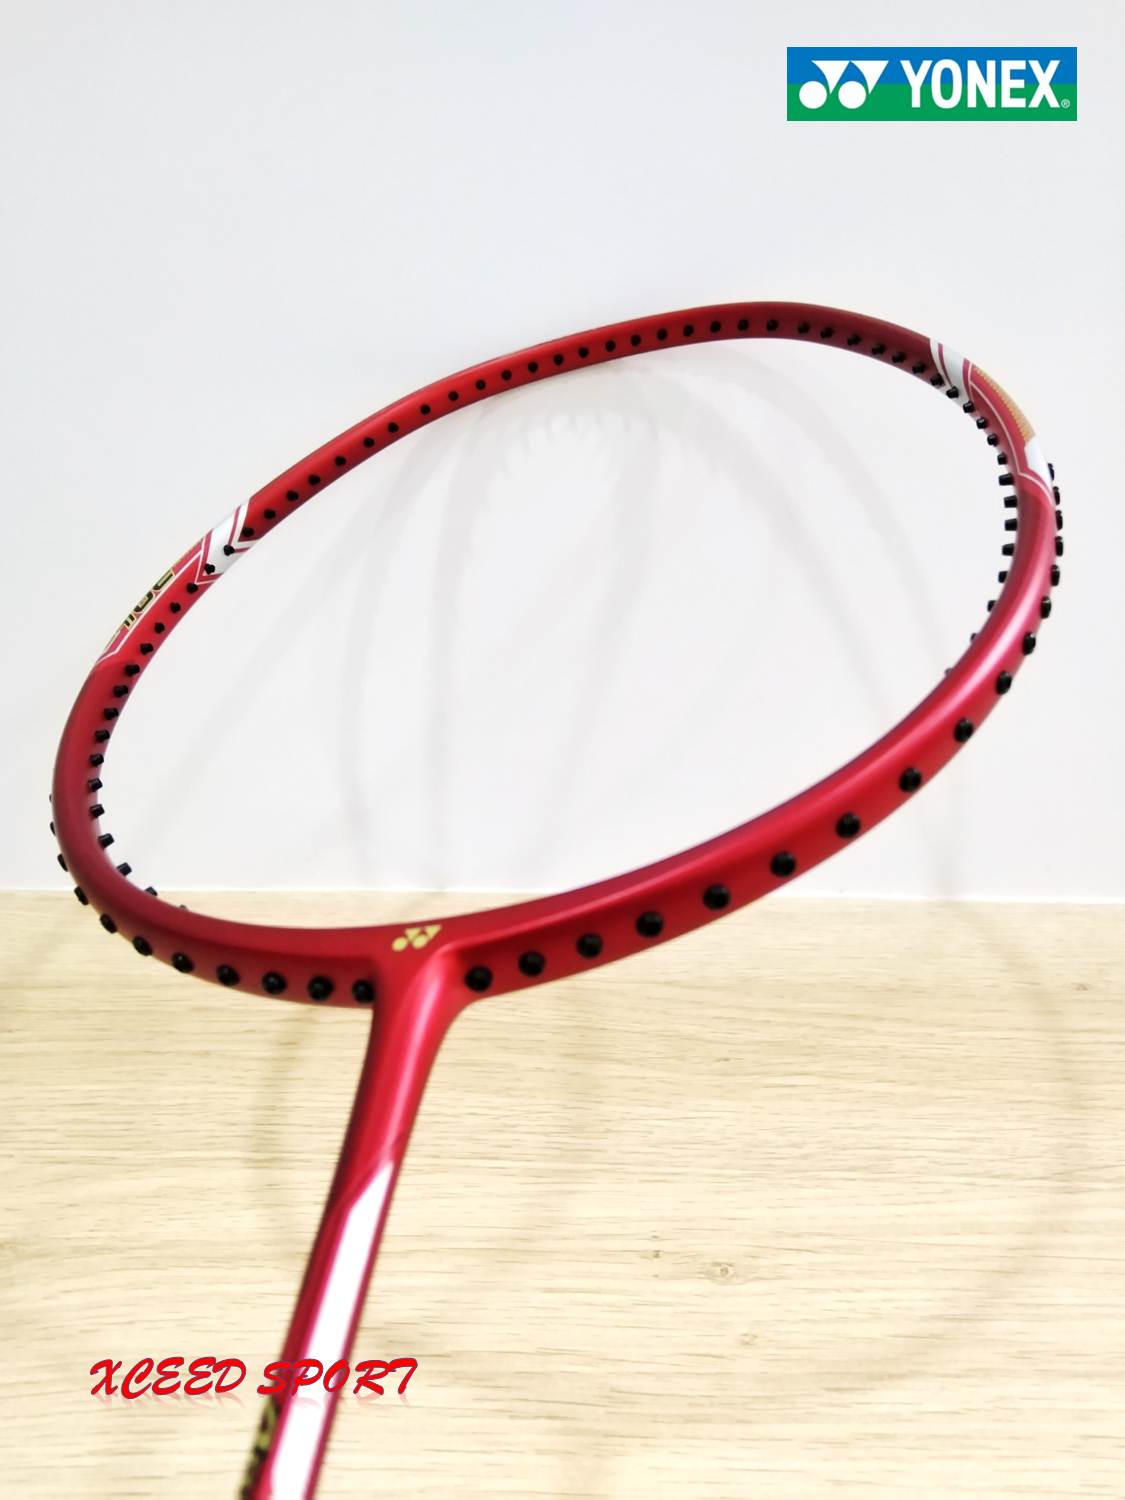 100% Original Yonex Arcsaber 71 Light Badminton Racket FREE String & Grip 